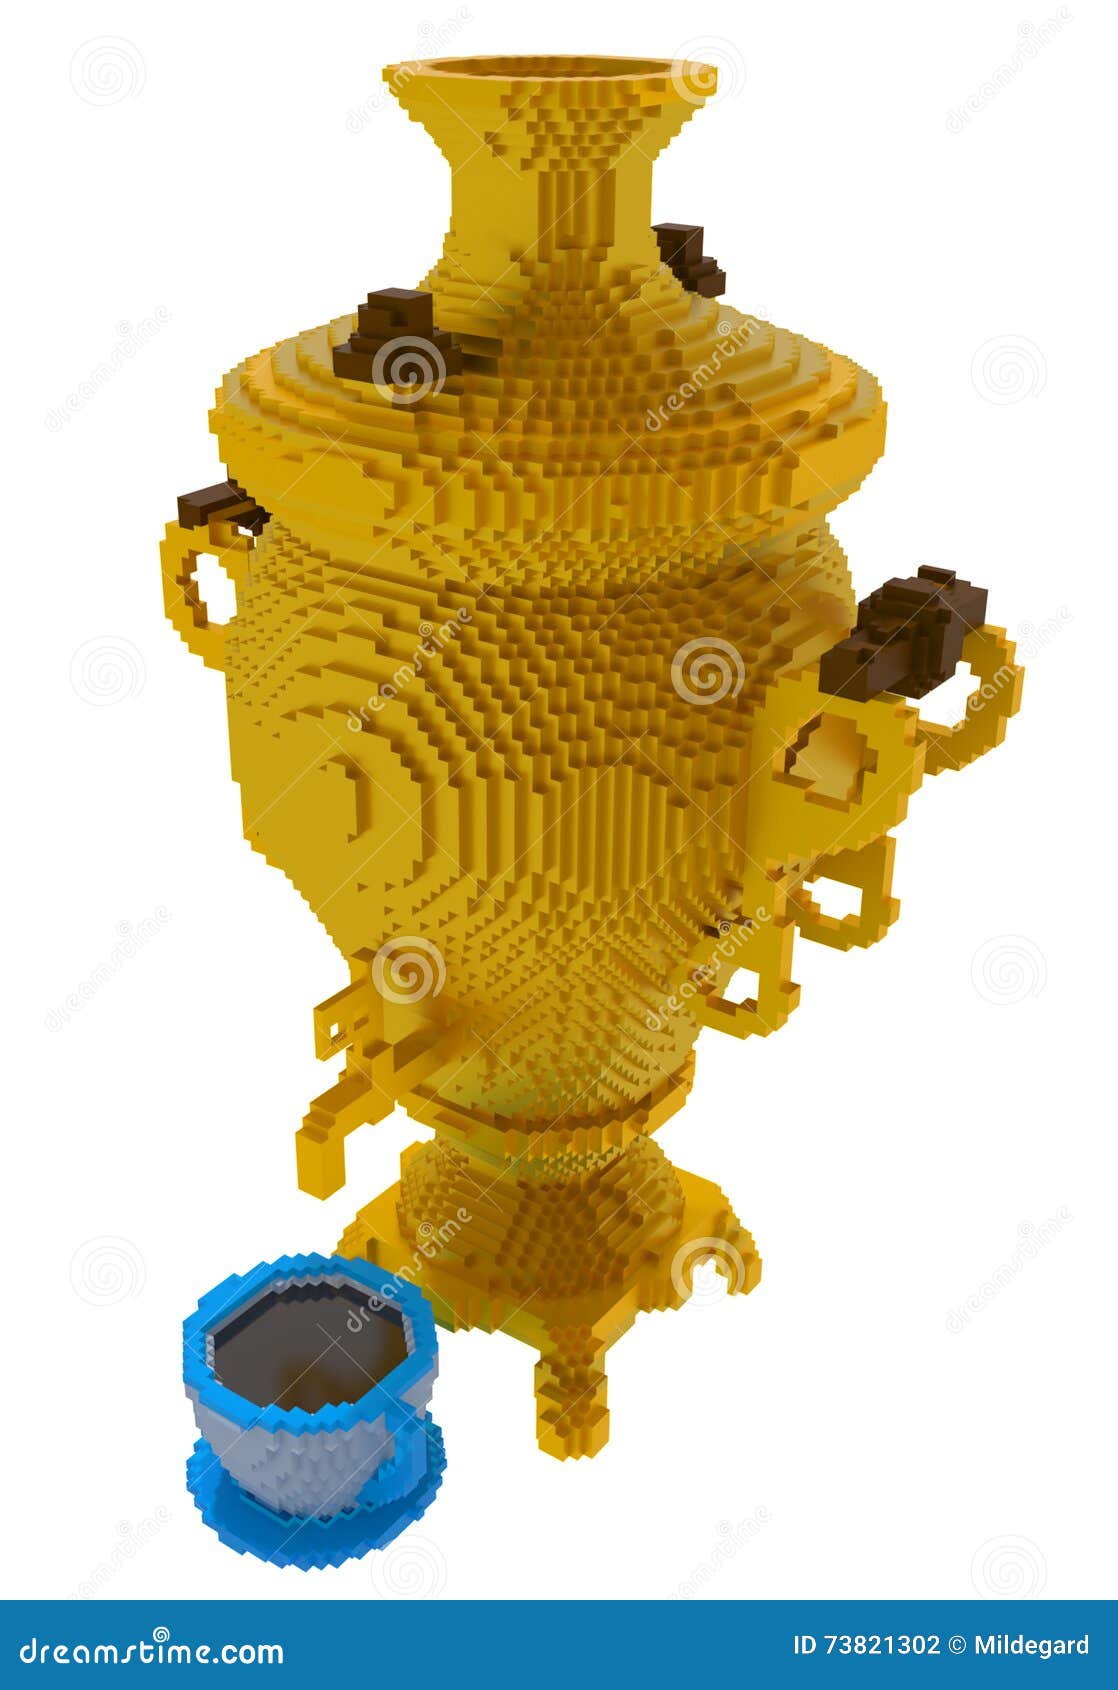 Russian tea making urns